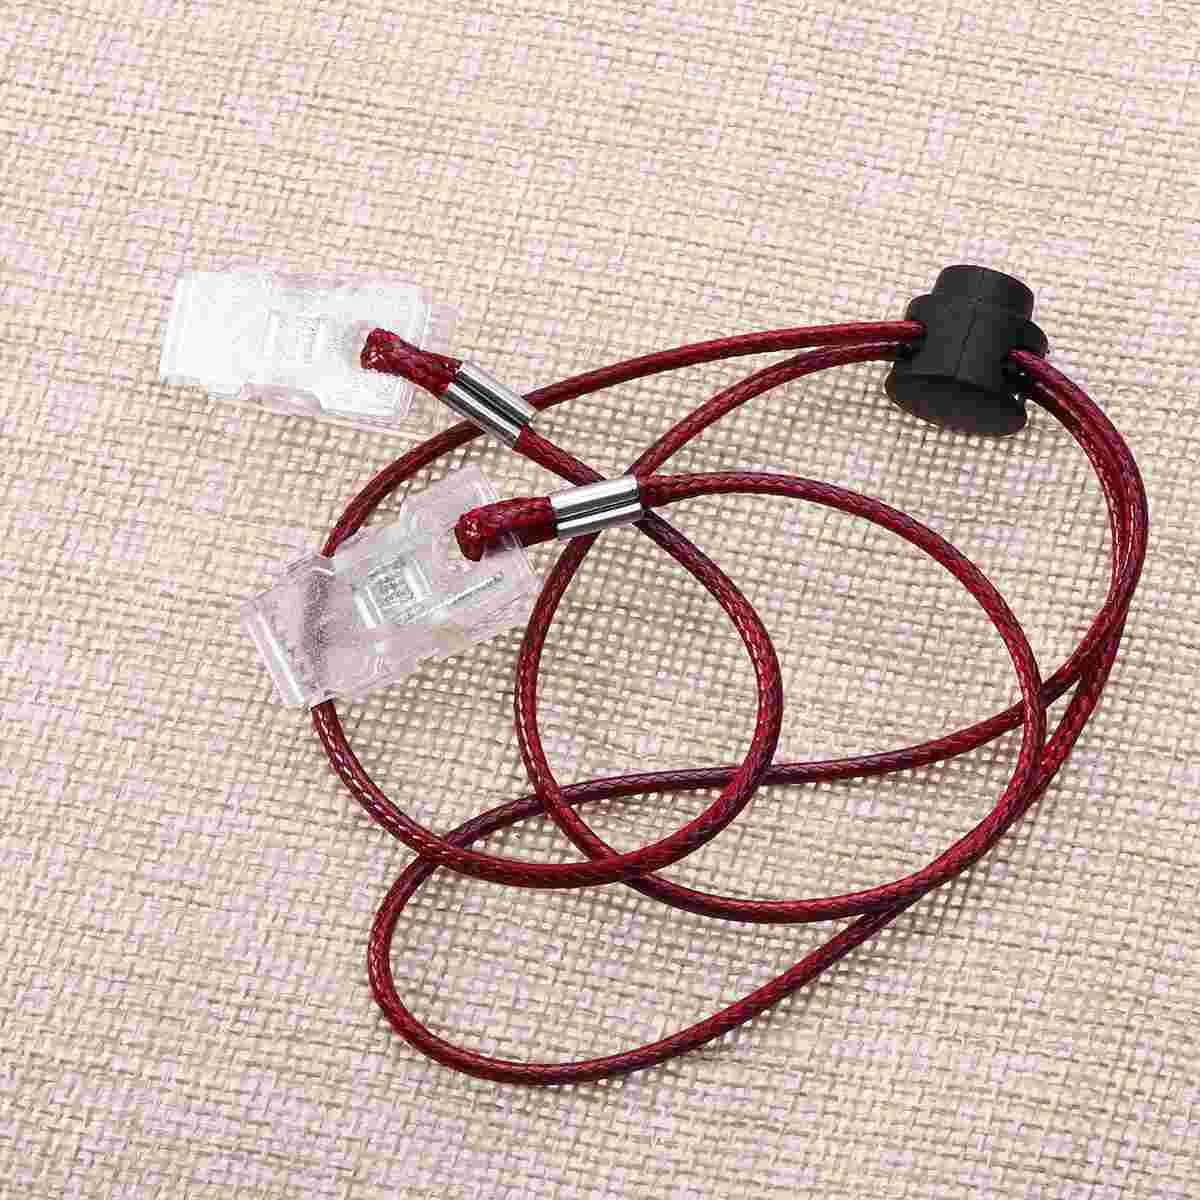 

Holder Bib Napkin Chain Clipslanyard Clip Strap Adjustable Neckflexible Dentist Rope Ear Towel Extender Supplies Hanger Cover